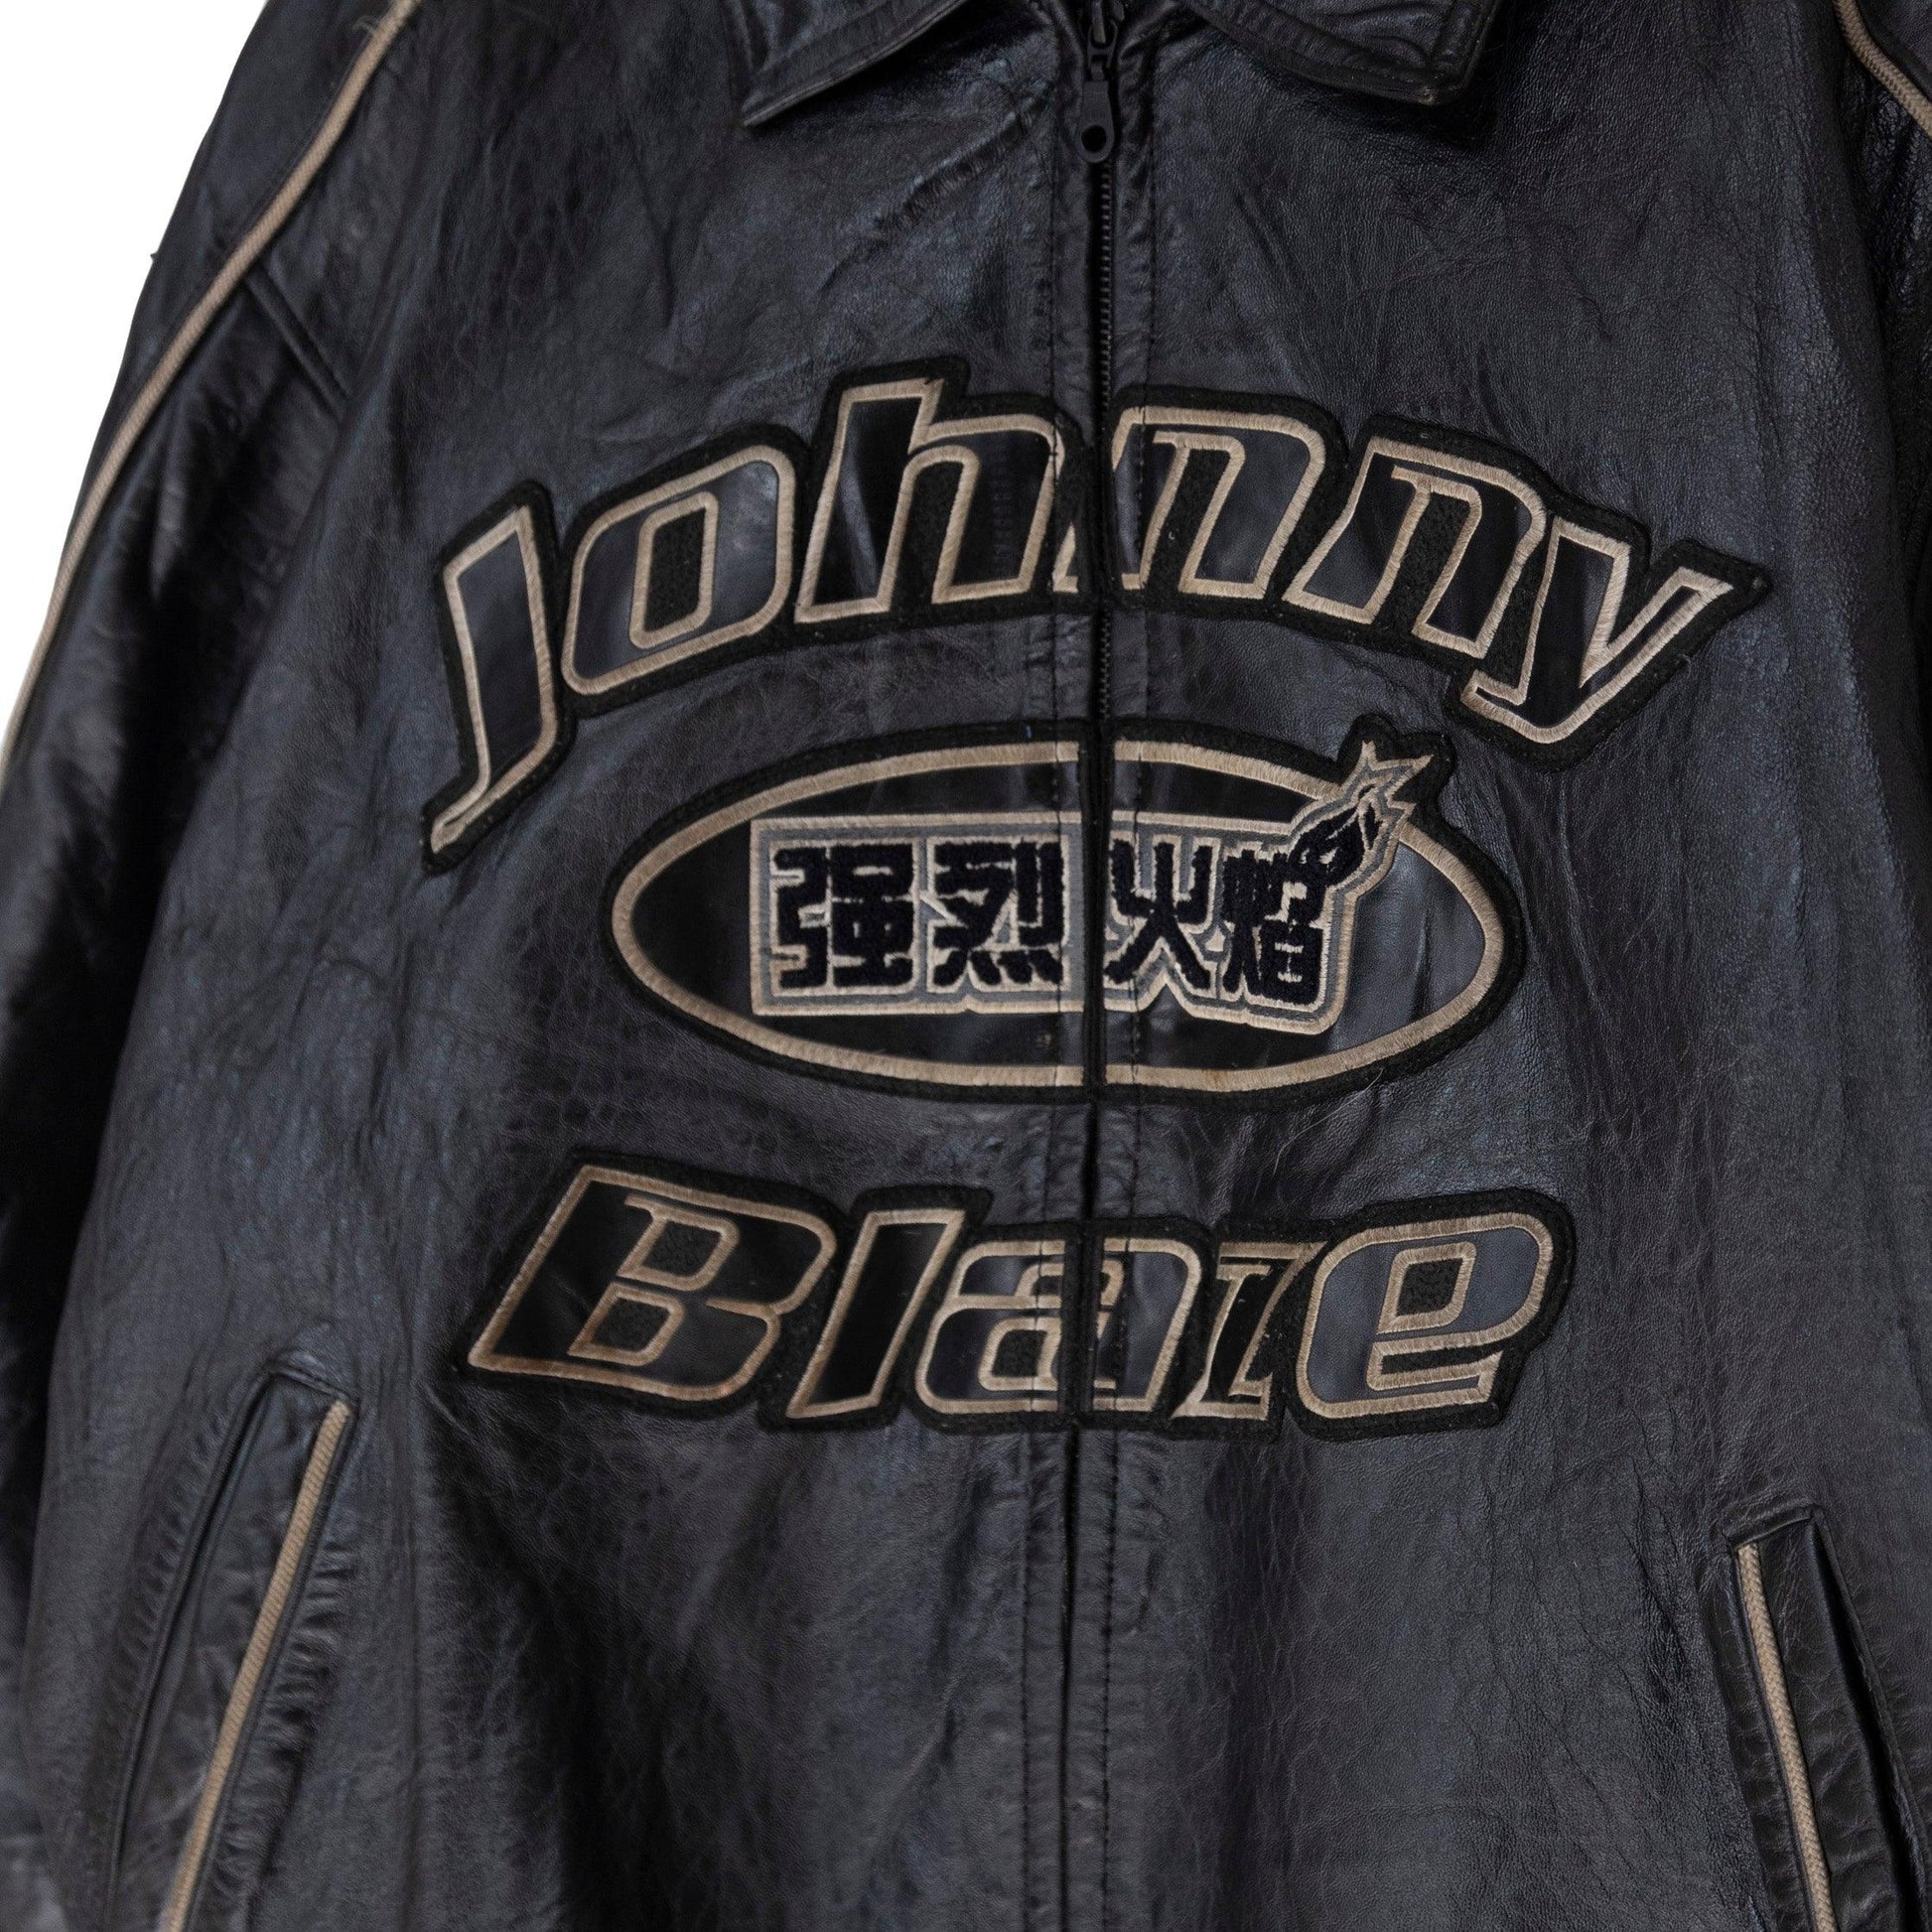 Johnny Blaze Leather Bomber Jacket - Known Source